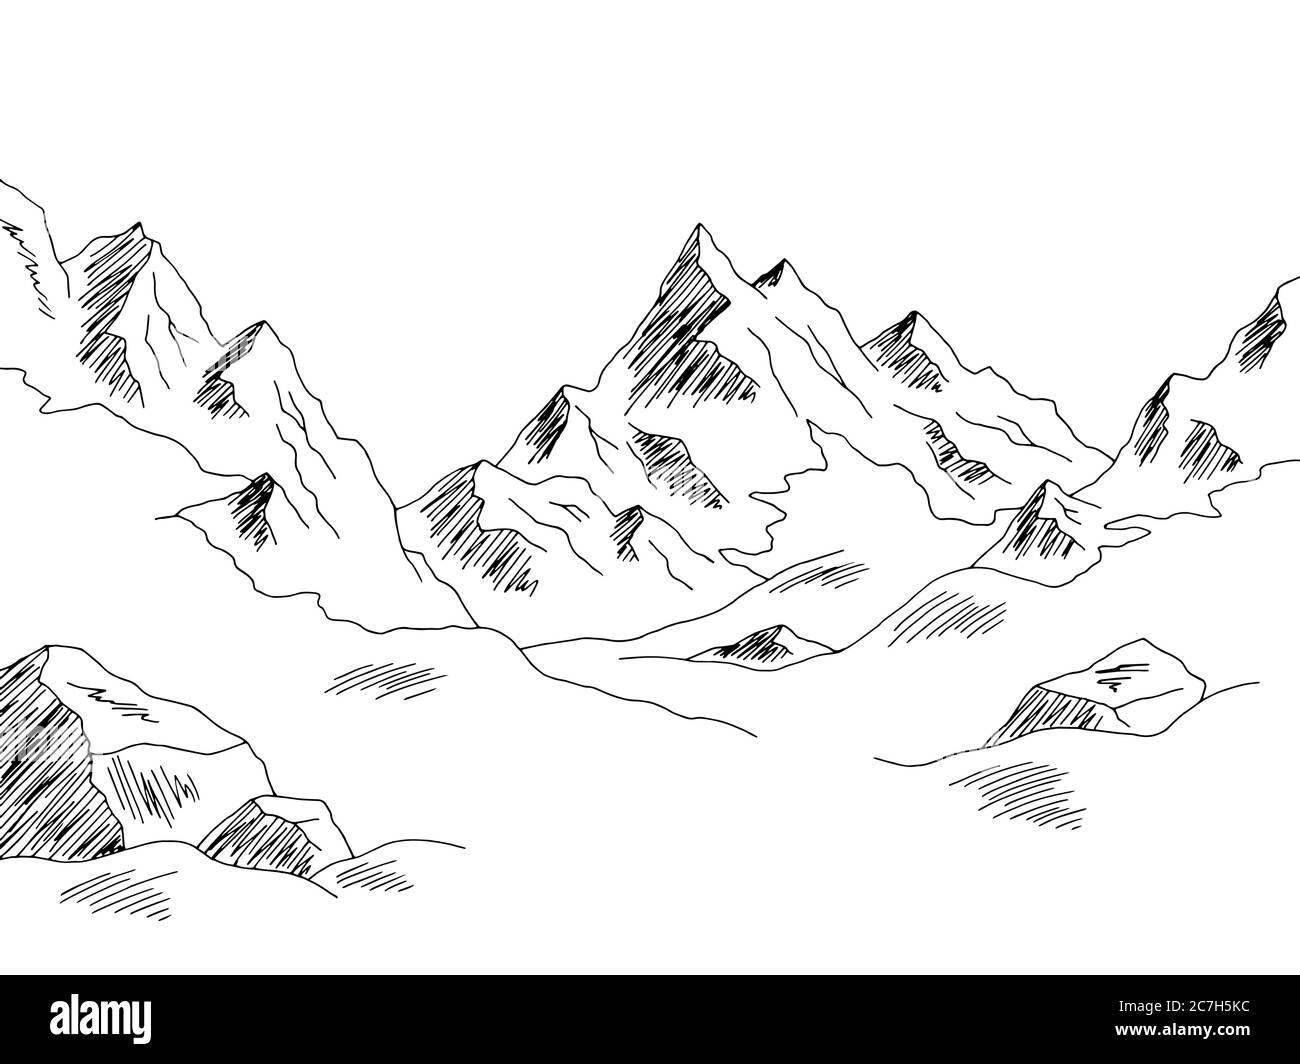 Gletscher Berge Hügel Grafik schwarz weiß Landschaft Skizze Illustration Vektor Stock Vektor